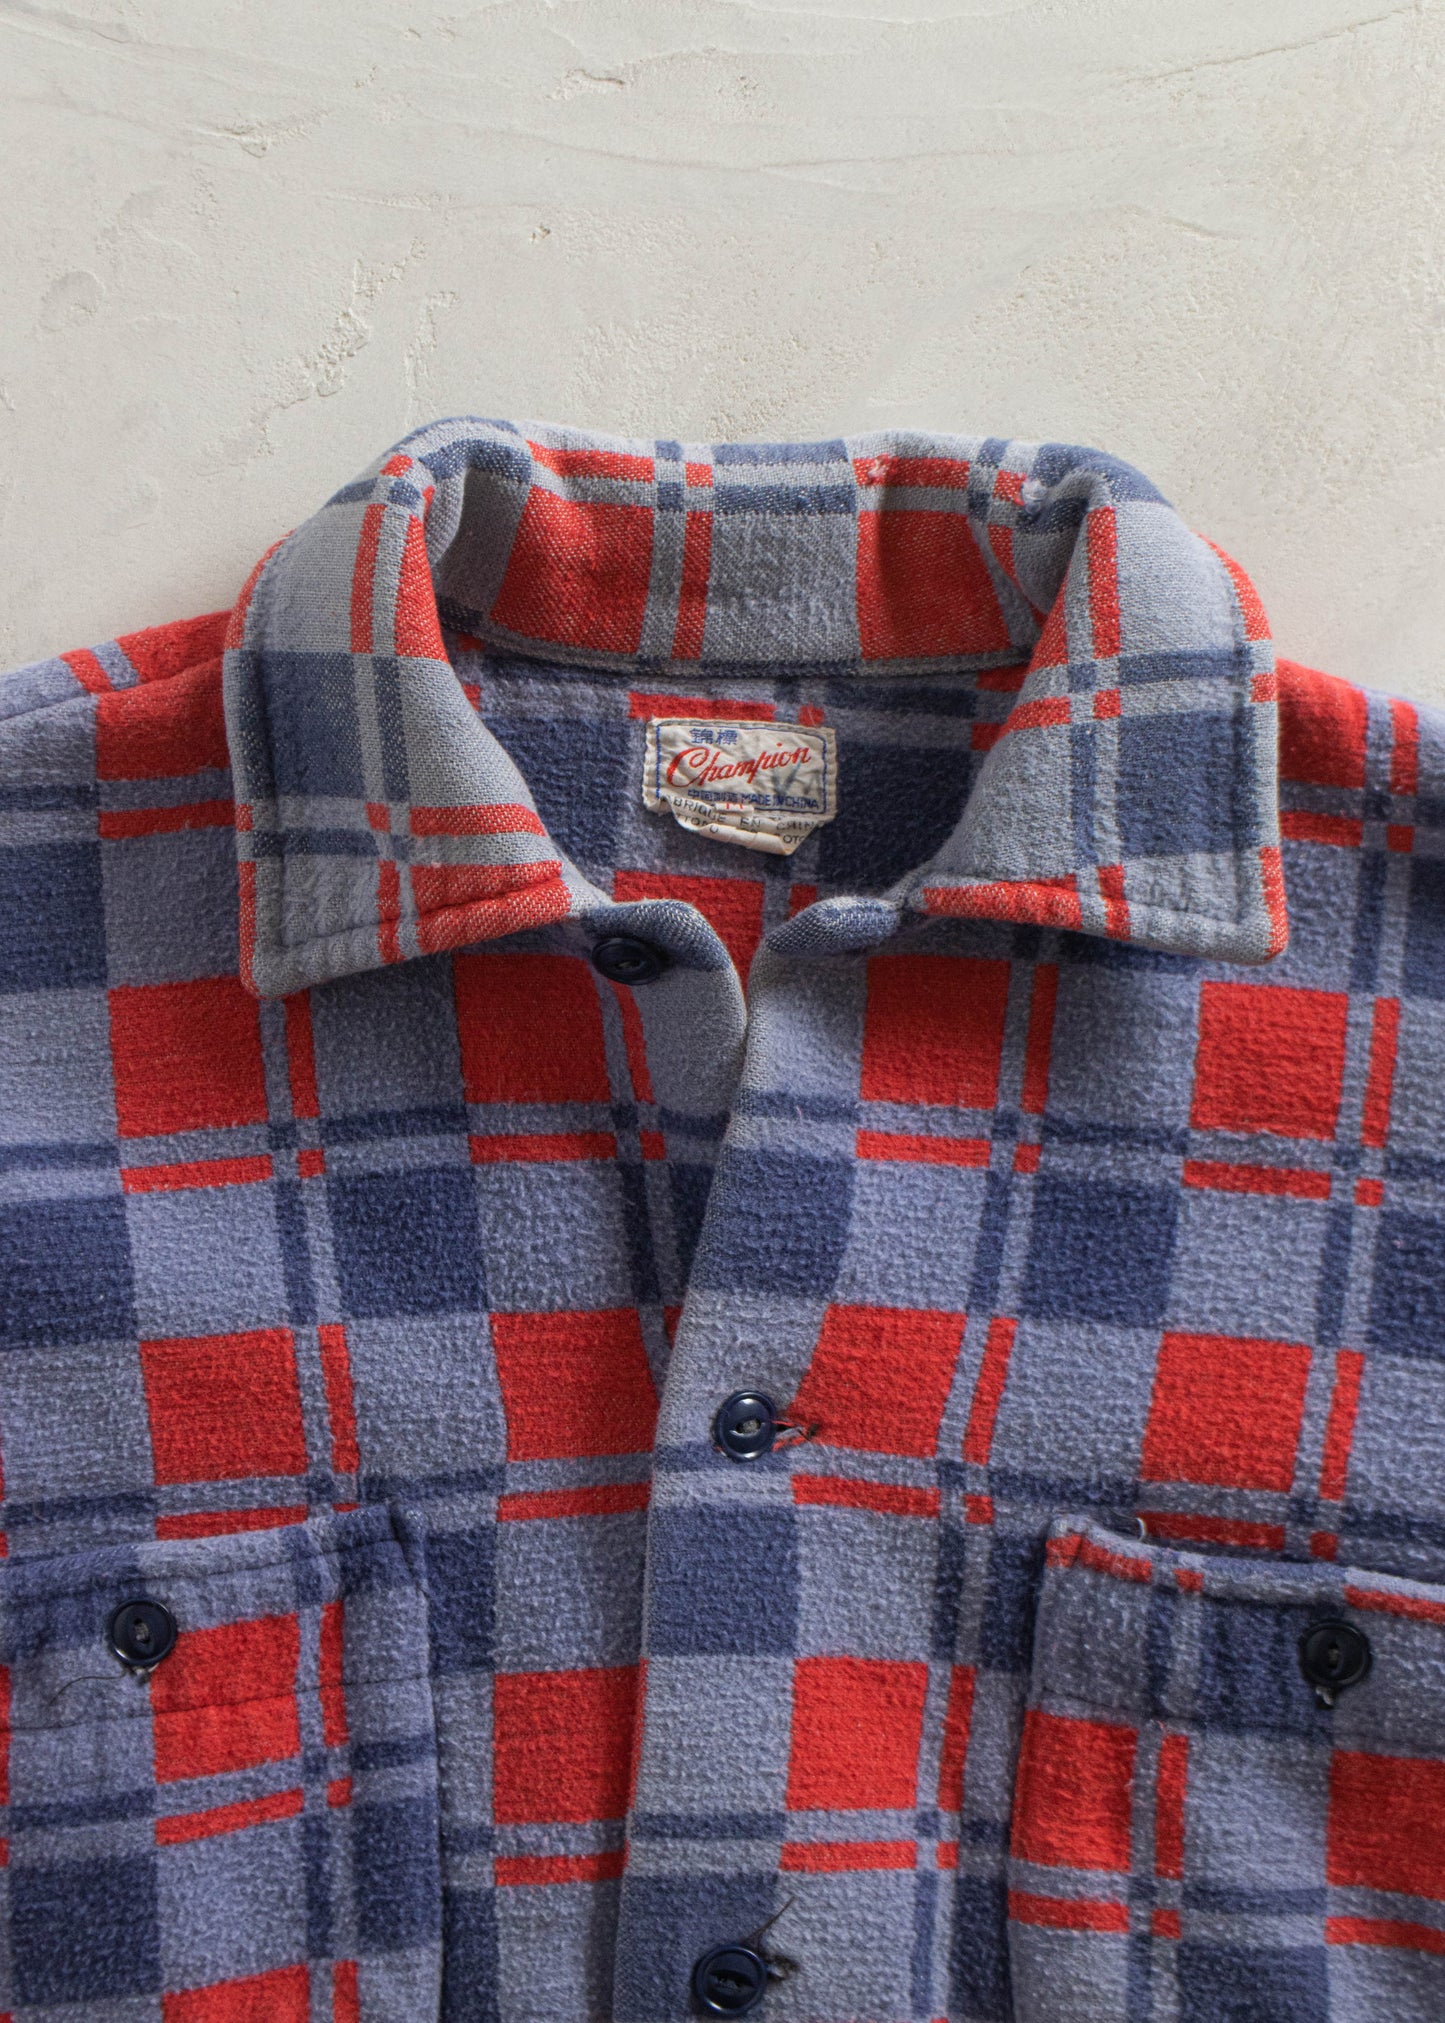 1980s Champion Cotton Flannel Button Up Shirt Size XS/S